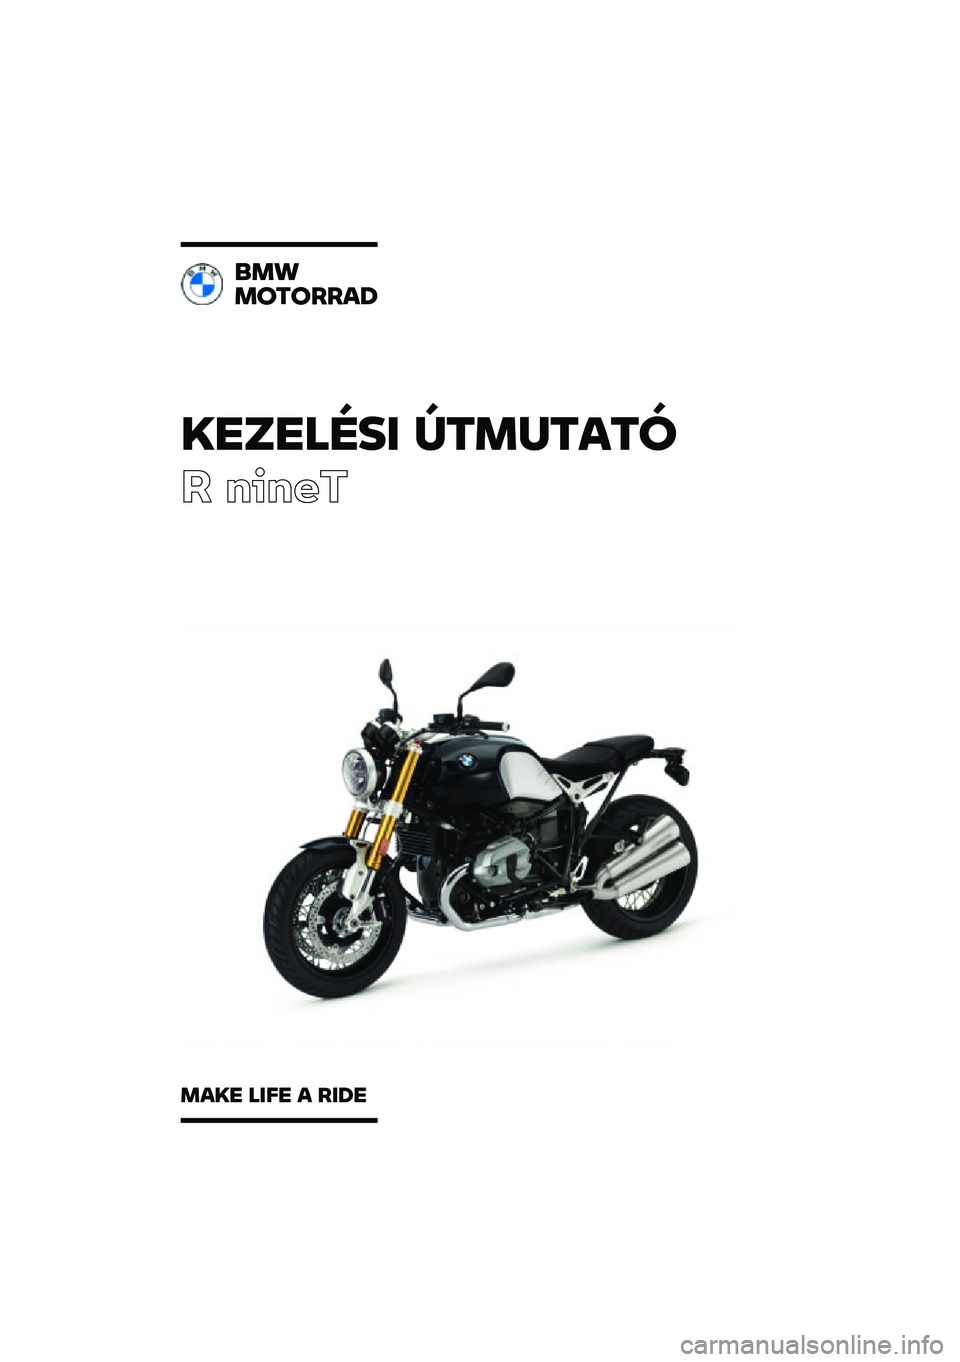 BMW MOTORRAD R NINE T 2021  Kezelési útmutató (in Hungarian) �������\b�	 �
�\f�
��\f��\f�
� �����
��
�
�
��\f�����
�
��� ��	�� � ��	�� 